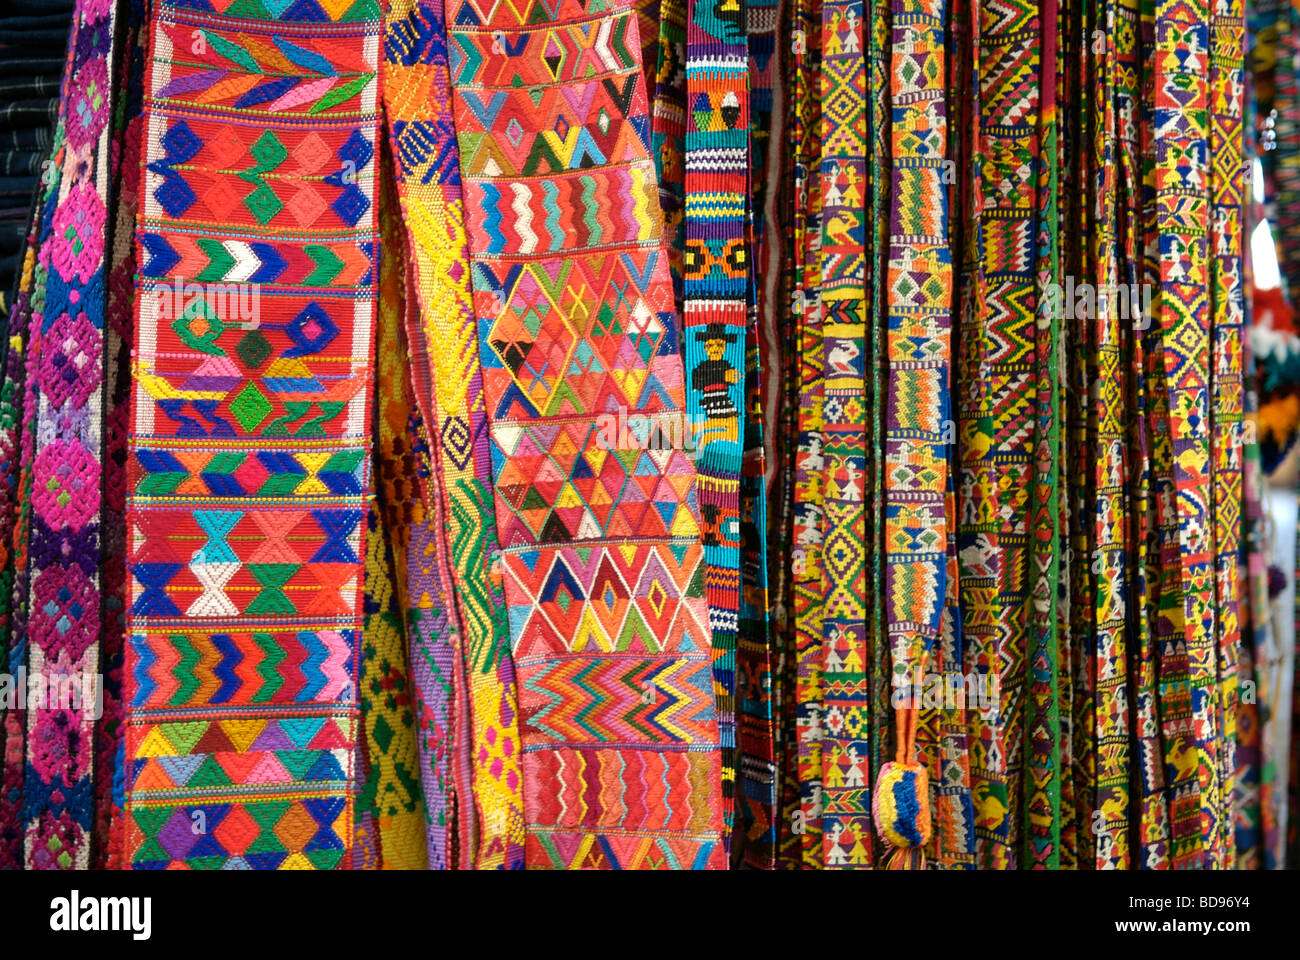 Guatemalan textiles on display in Antigua, Guatemala. Stock Photo